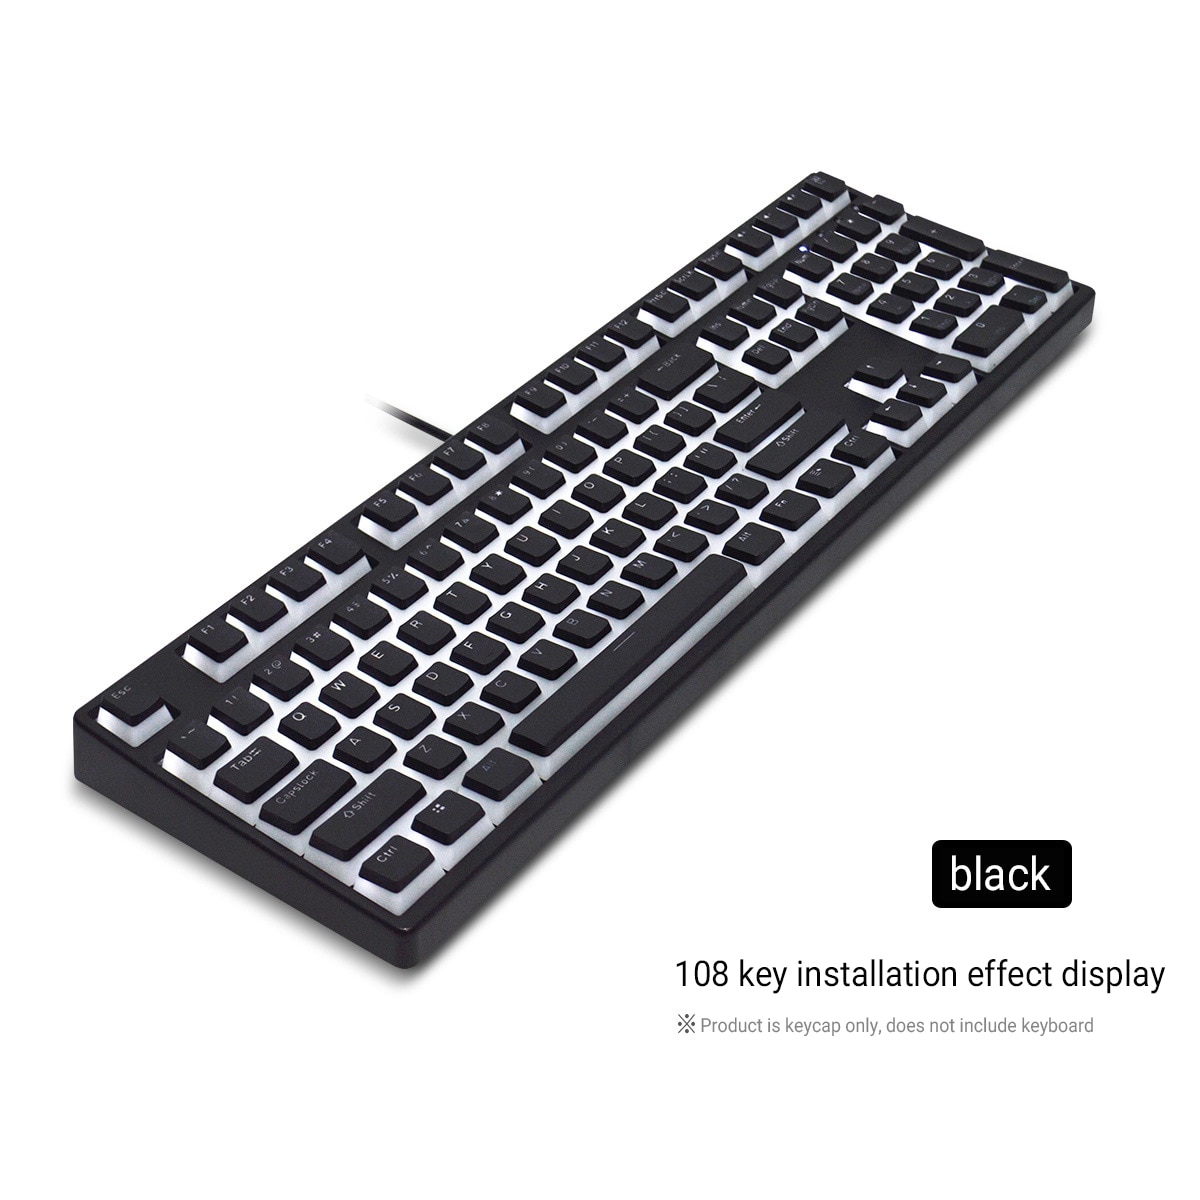 Pudding Keycaps OEM Profile PBT Double Shot Keycap For Mx Switch Mechanical Keyboard ISO Layout RGB backlit Key Caps